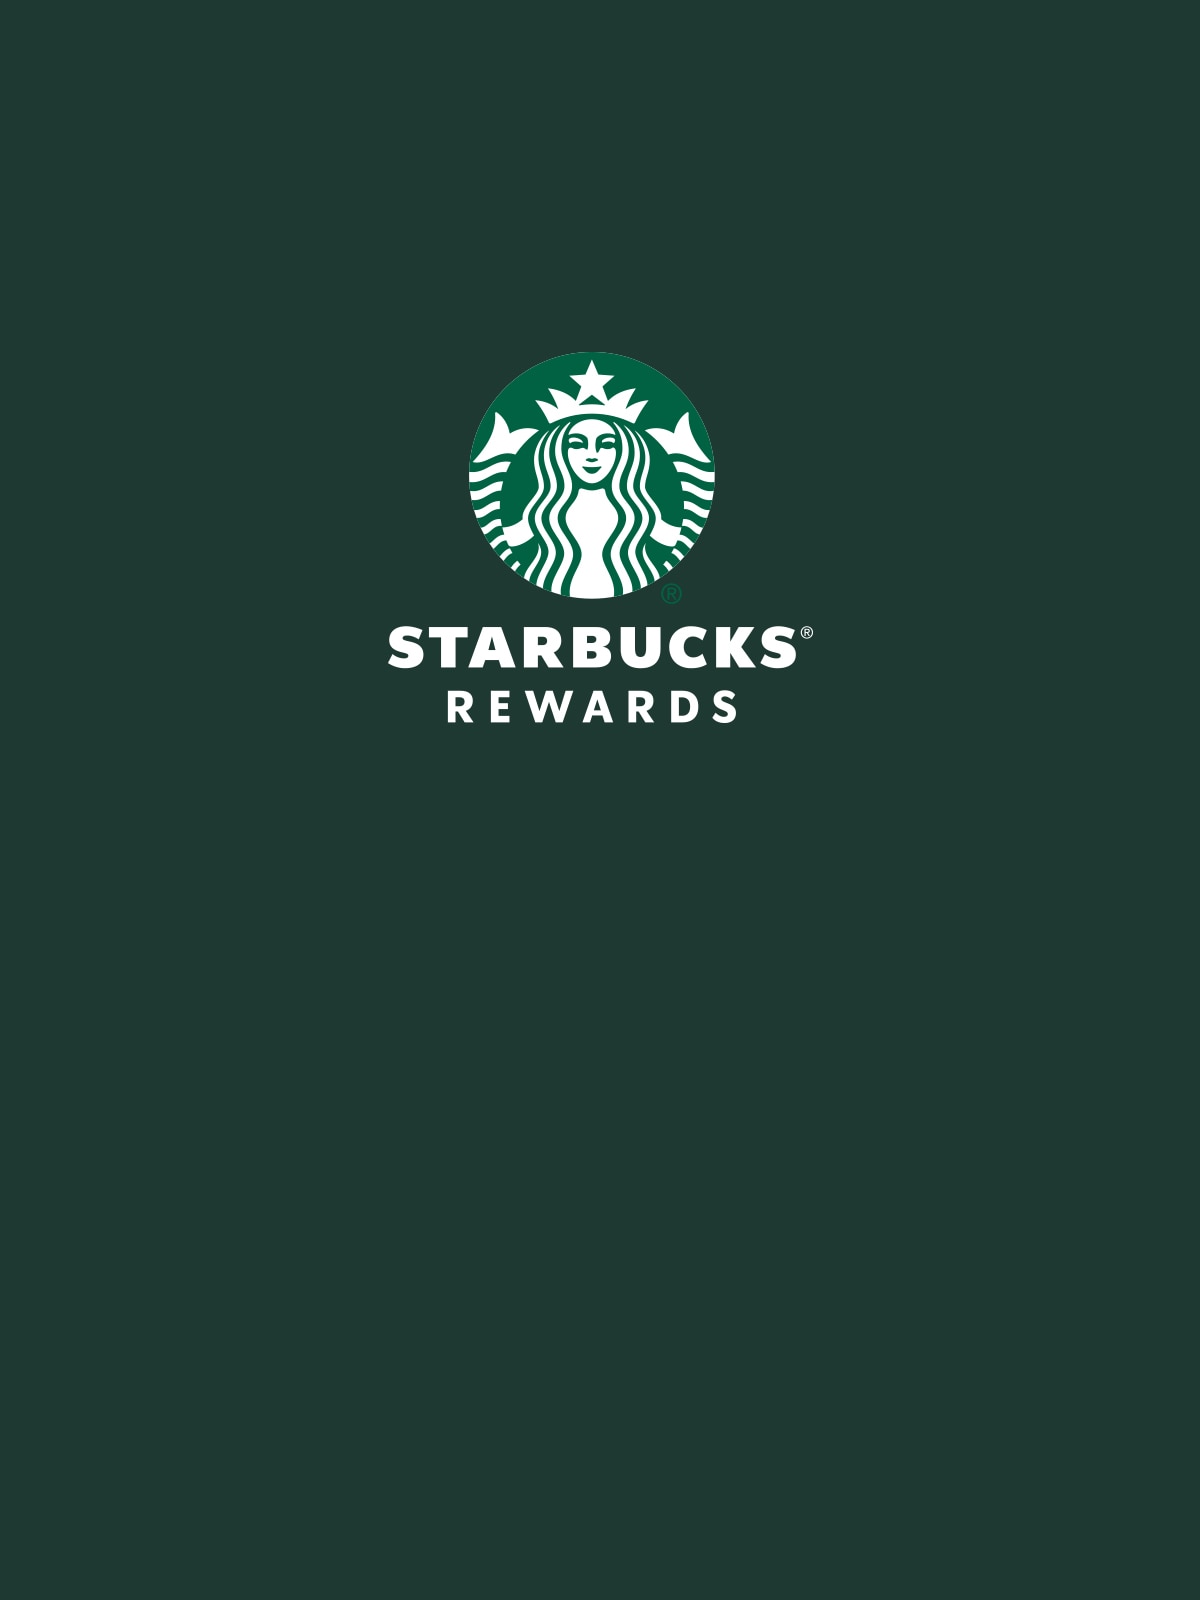 Starbucks Rewards Program Starbucks Coffee Company